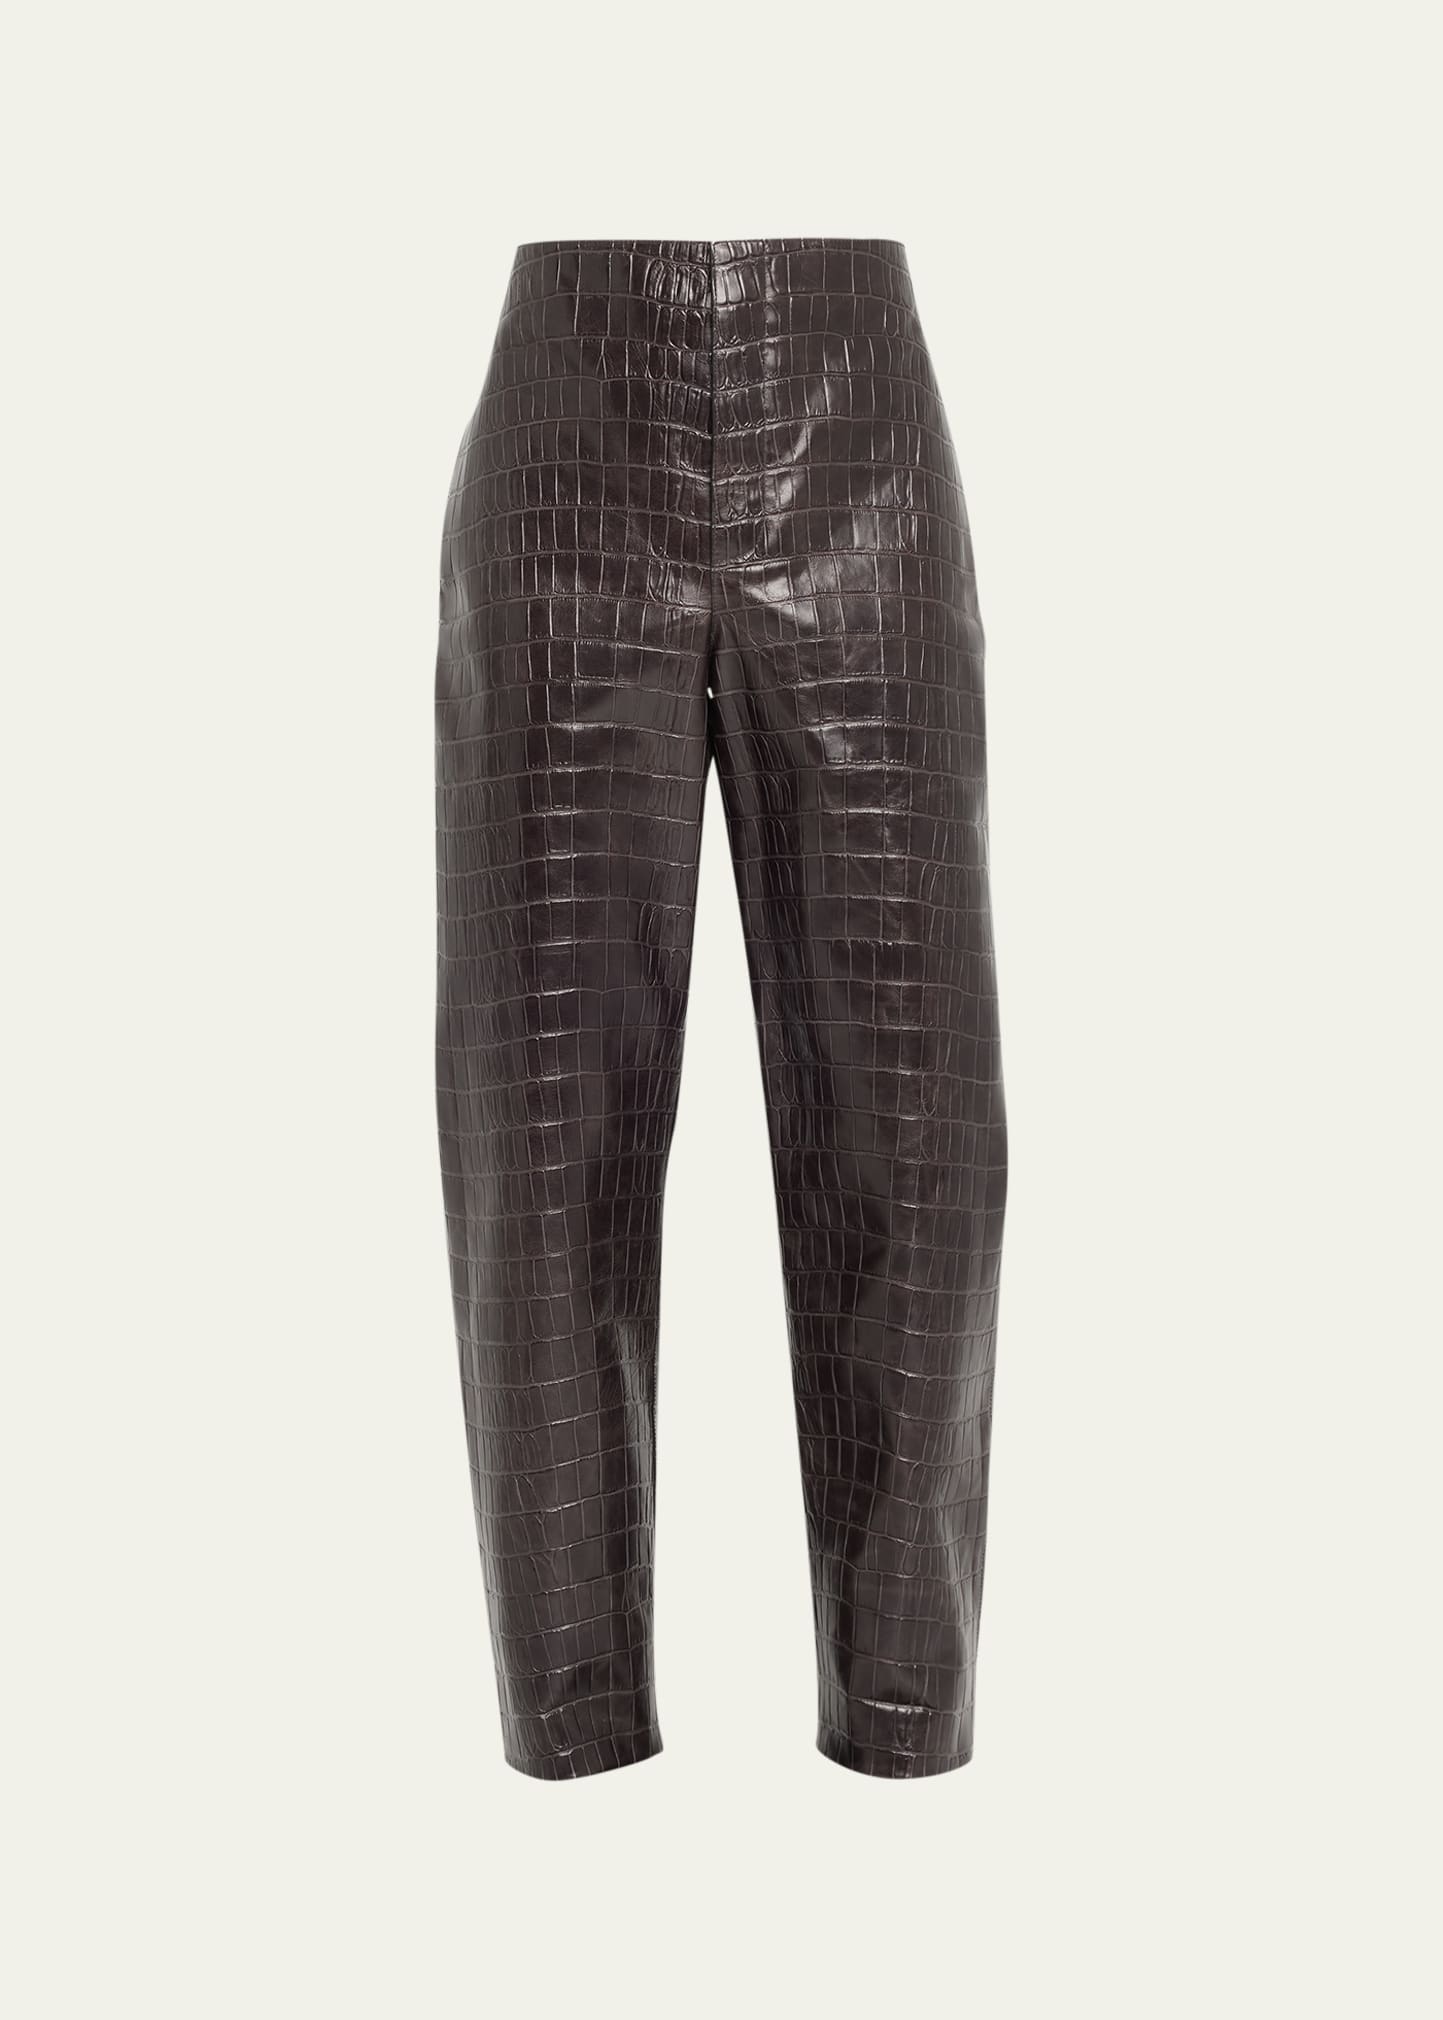 Bottega Veneta Men's Crocodile-effect Leather Trousers In Stucco